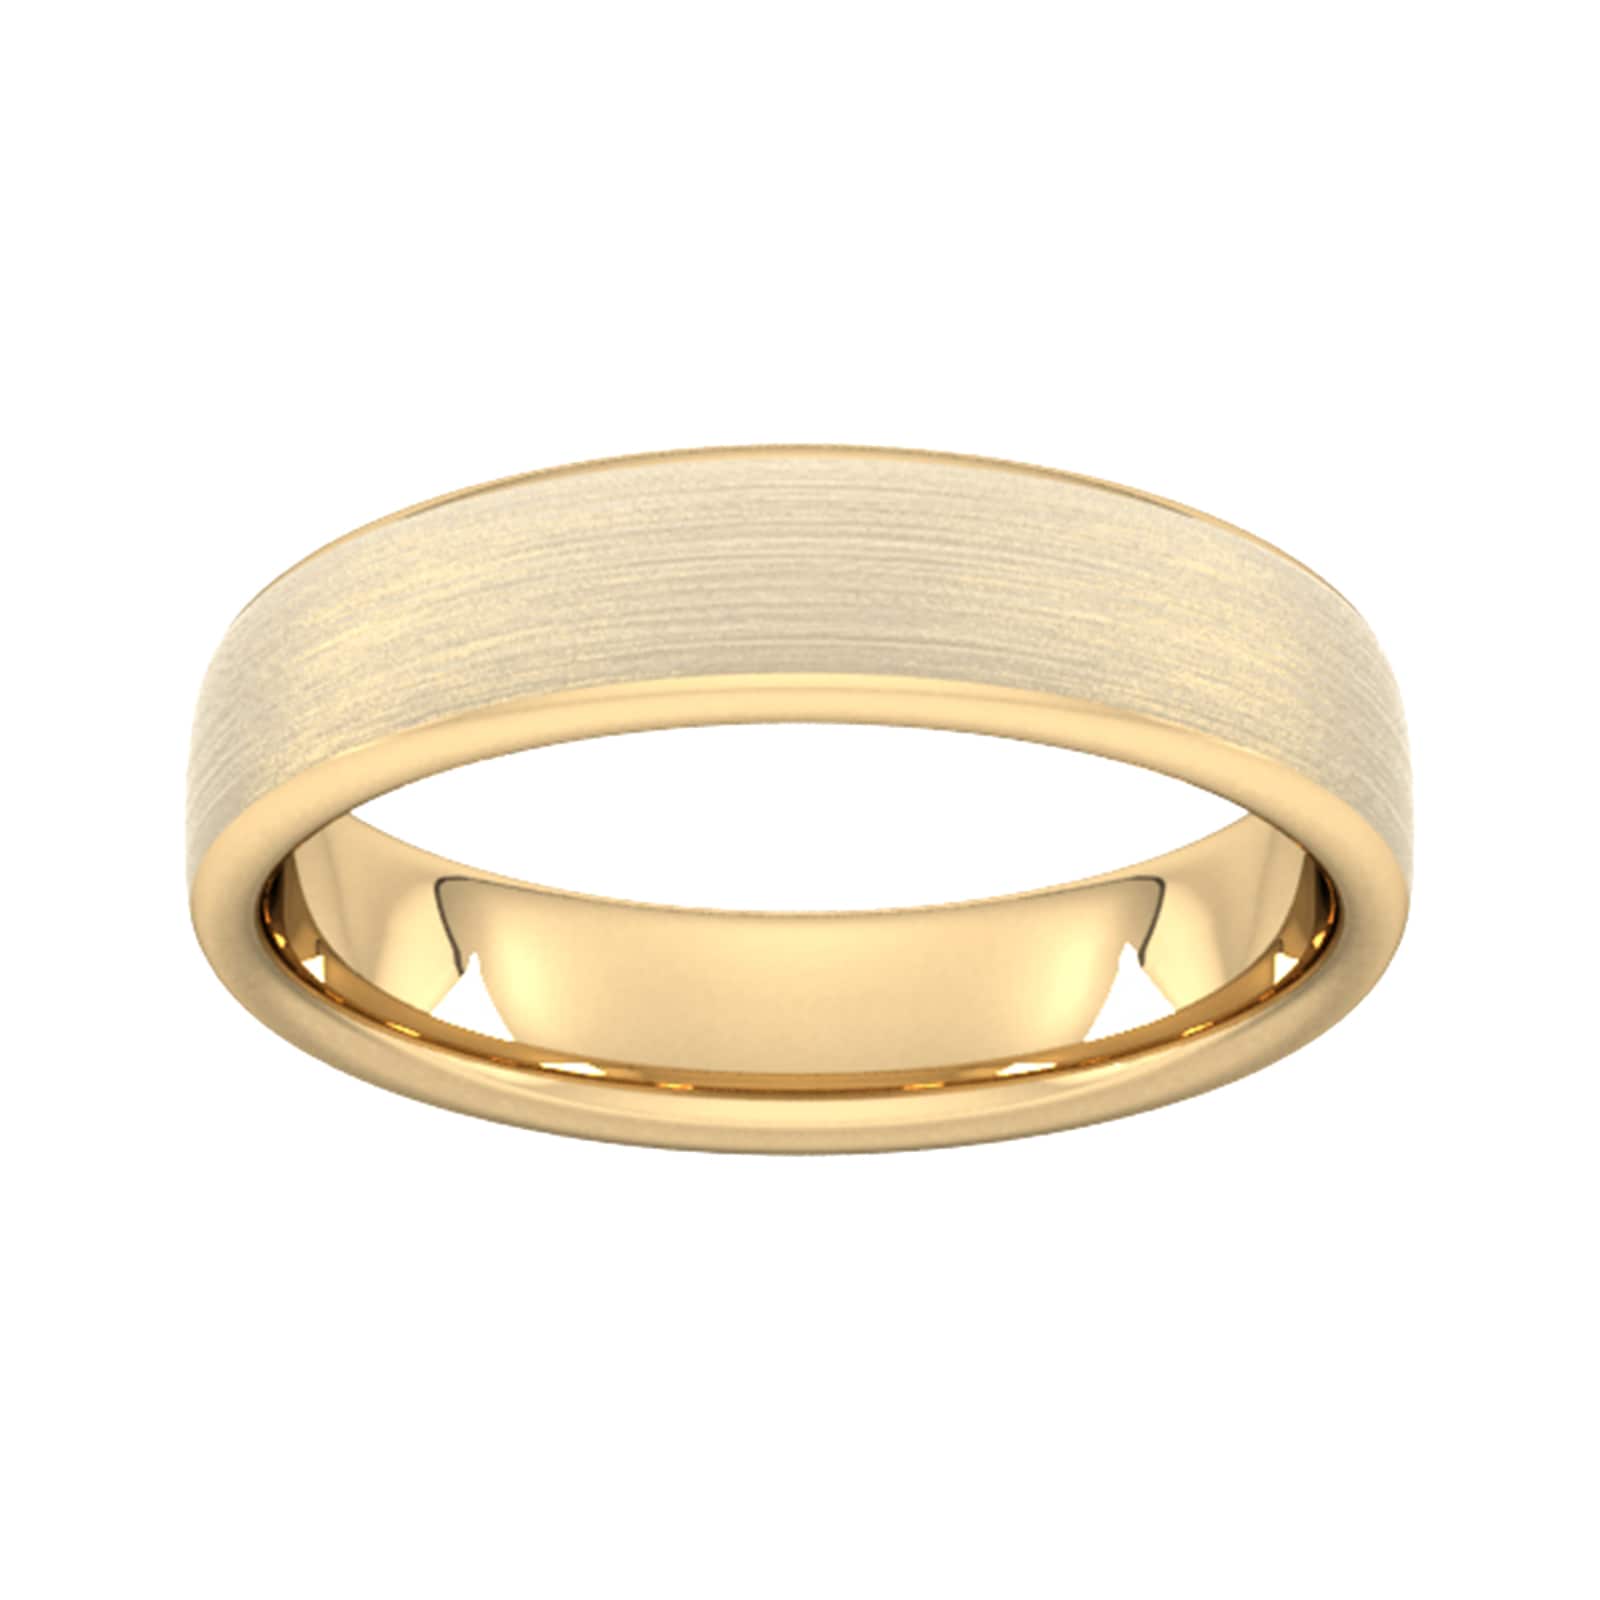 5mm Slight Court Heavy Matt Finished Wedding Ring In 9 Carat Yellow Gold - Ring Size Q